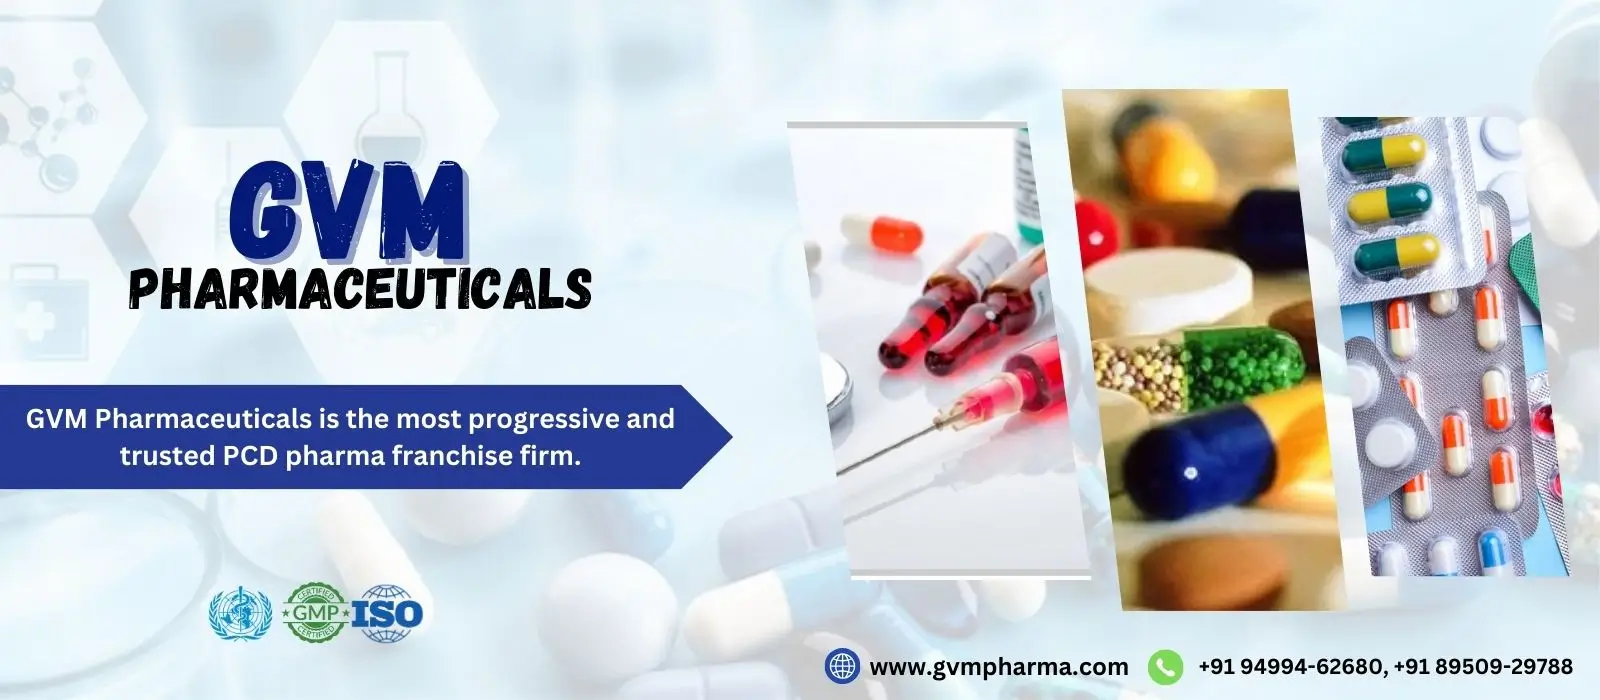 pcd pharma franchise company in ambala